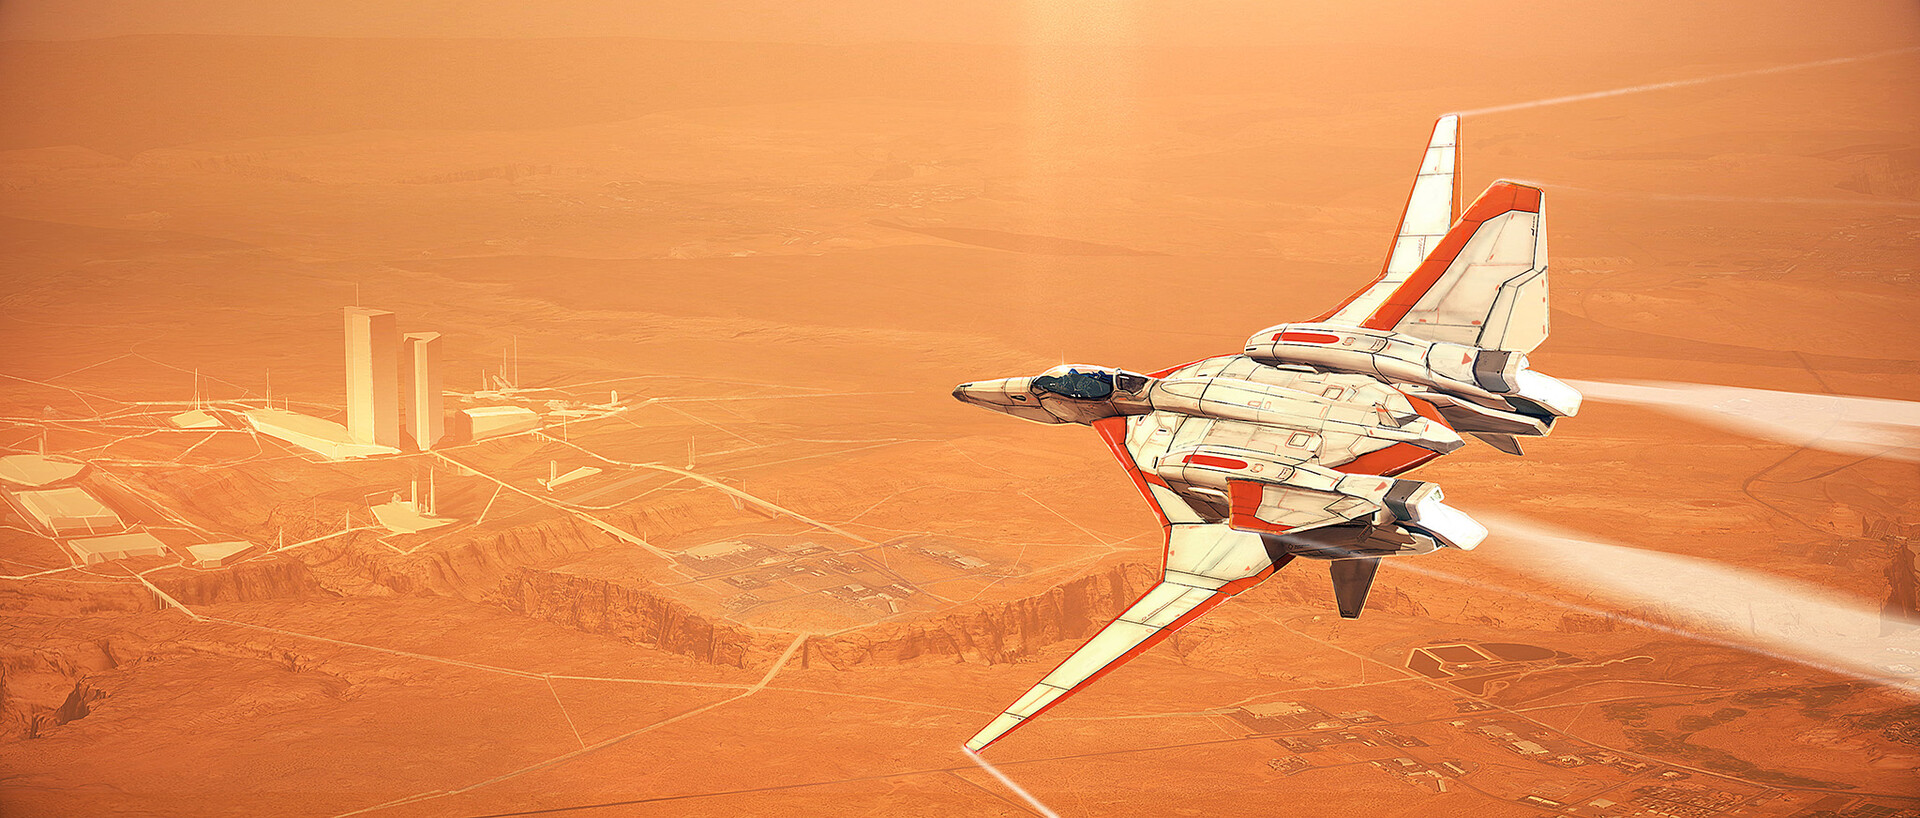 General 1920x818 jet fighter Mars science fiction Ronan Le Fur Robotech aircraft Macross